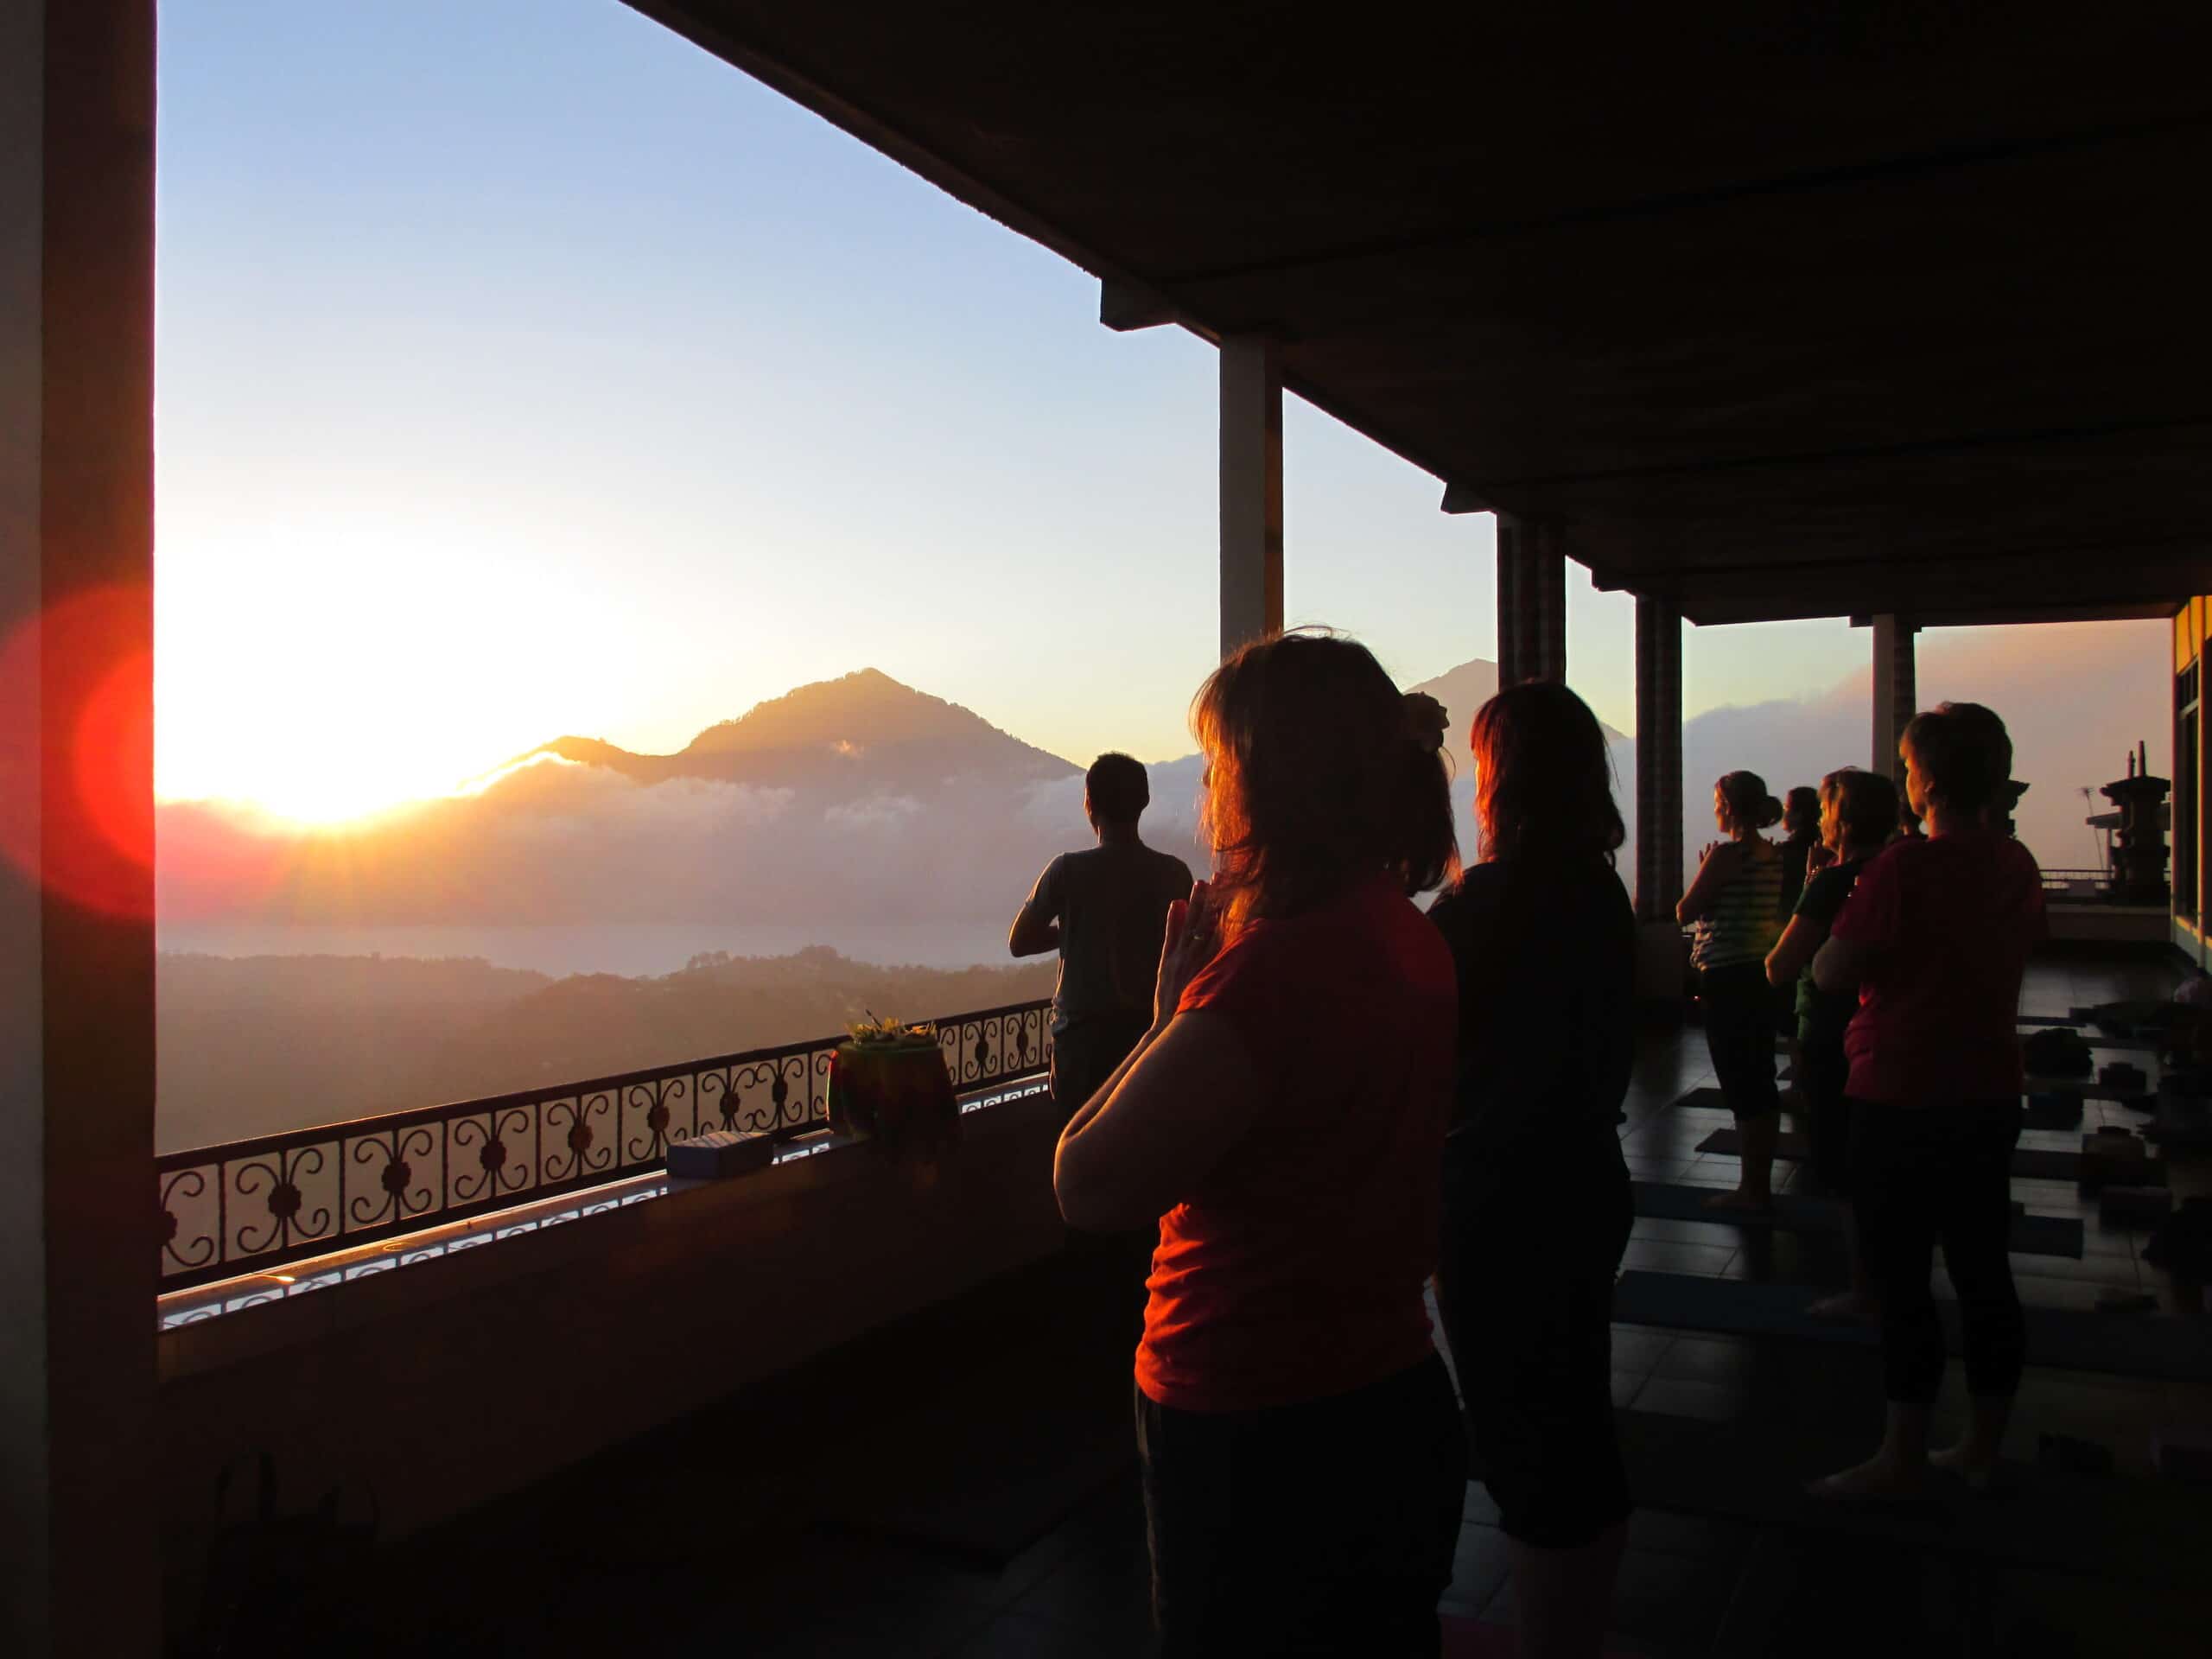 Sunrise at Gunung Batur